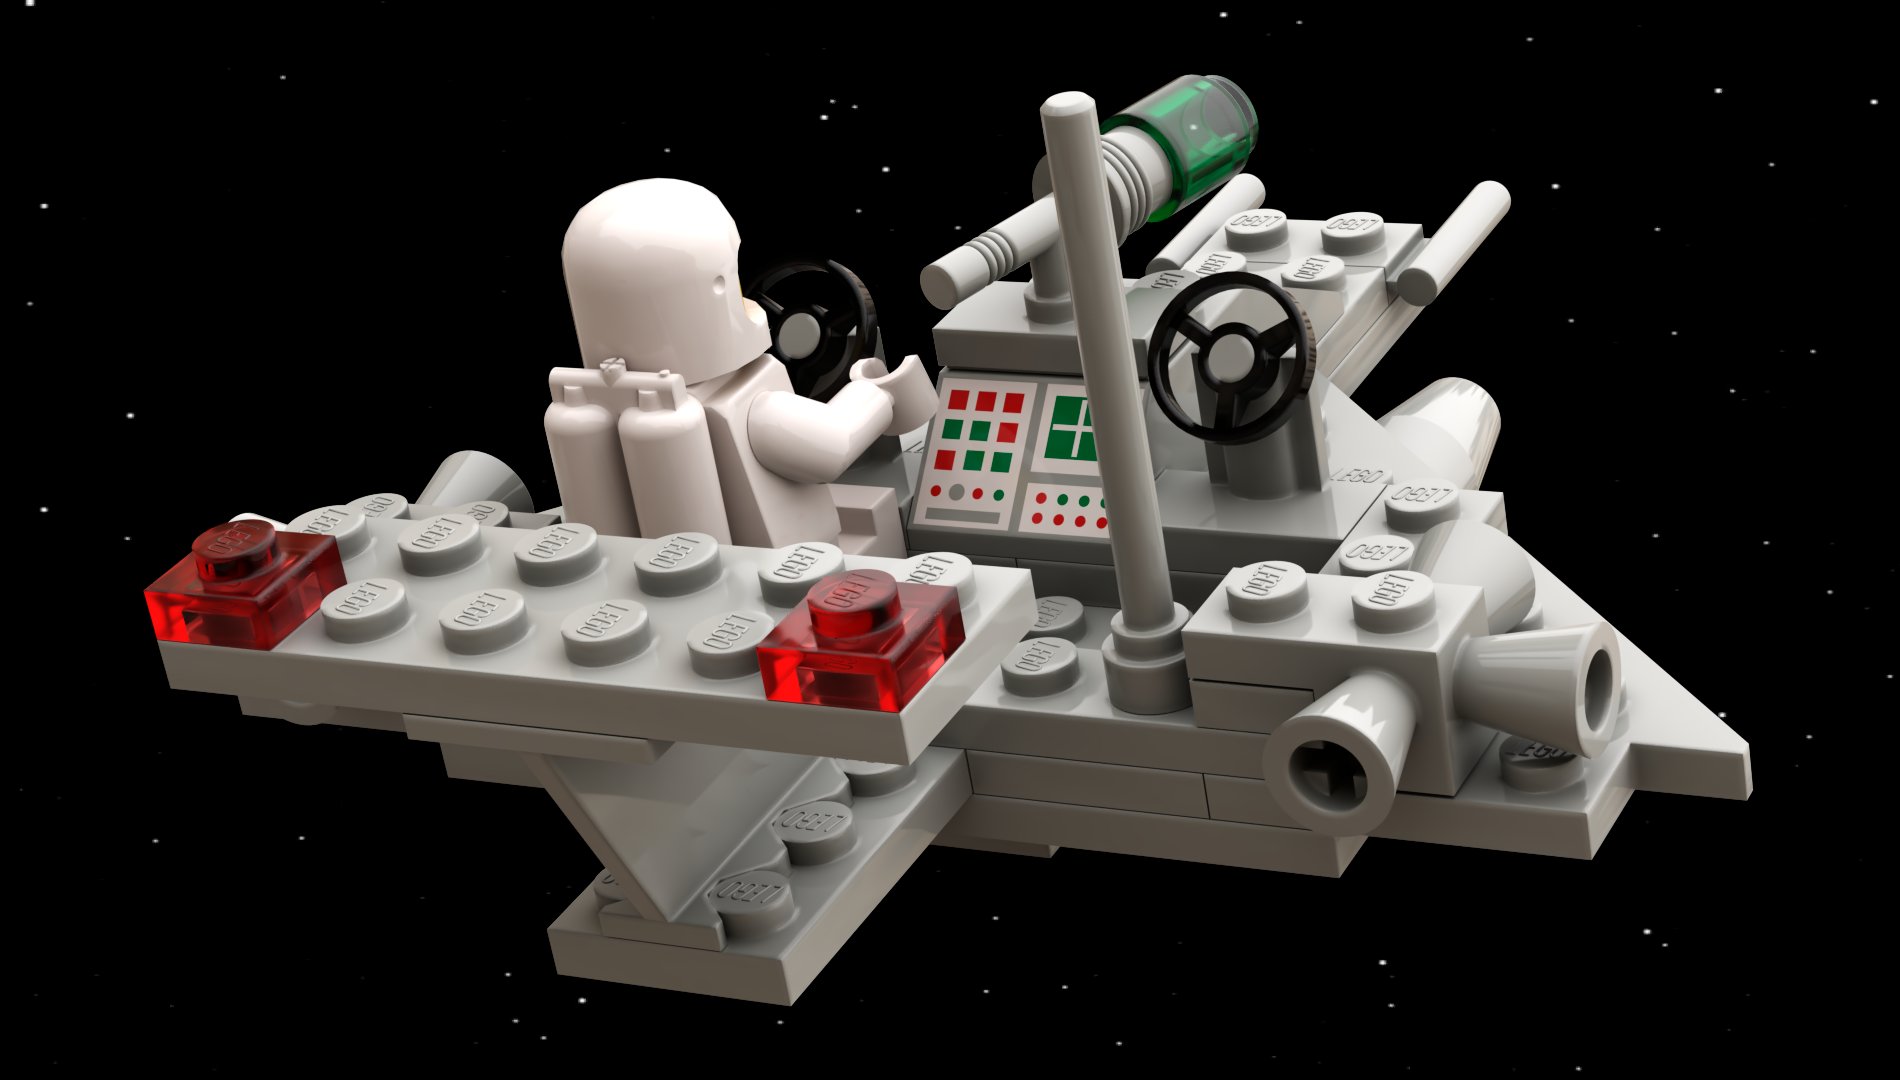 DaftPunker on Twitter: "The exploration space will go ahead... #LEGO #digitalLEGO /